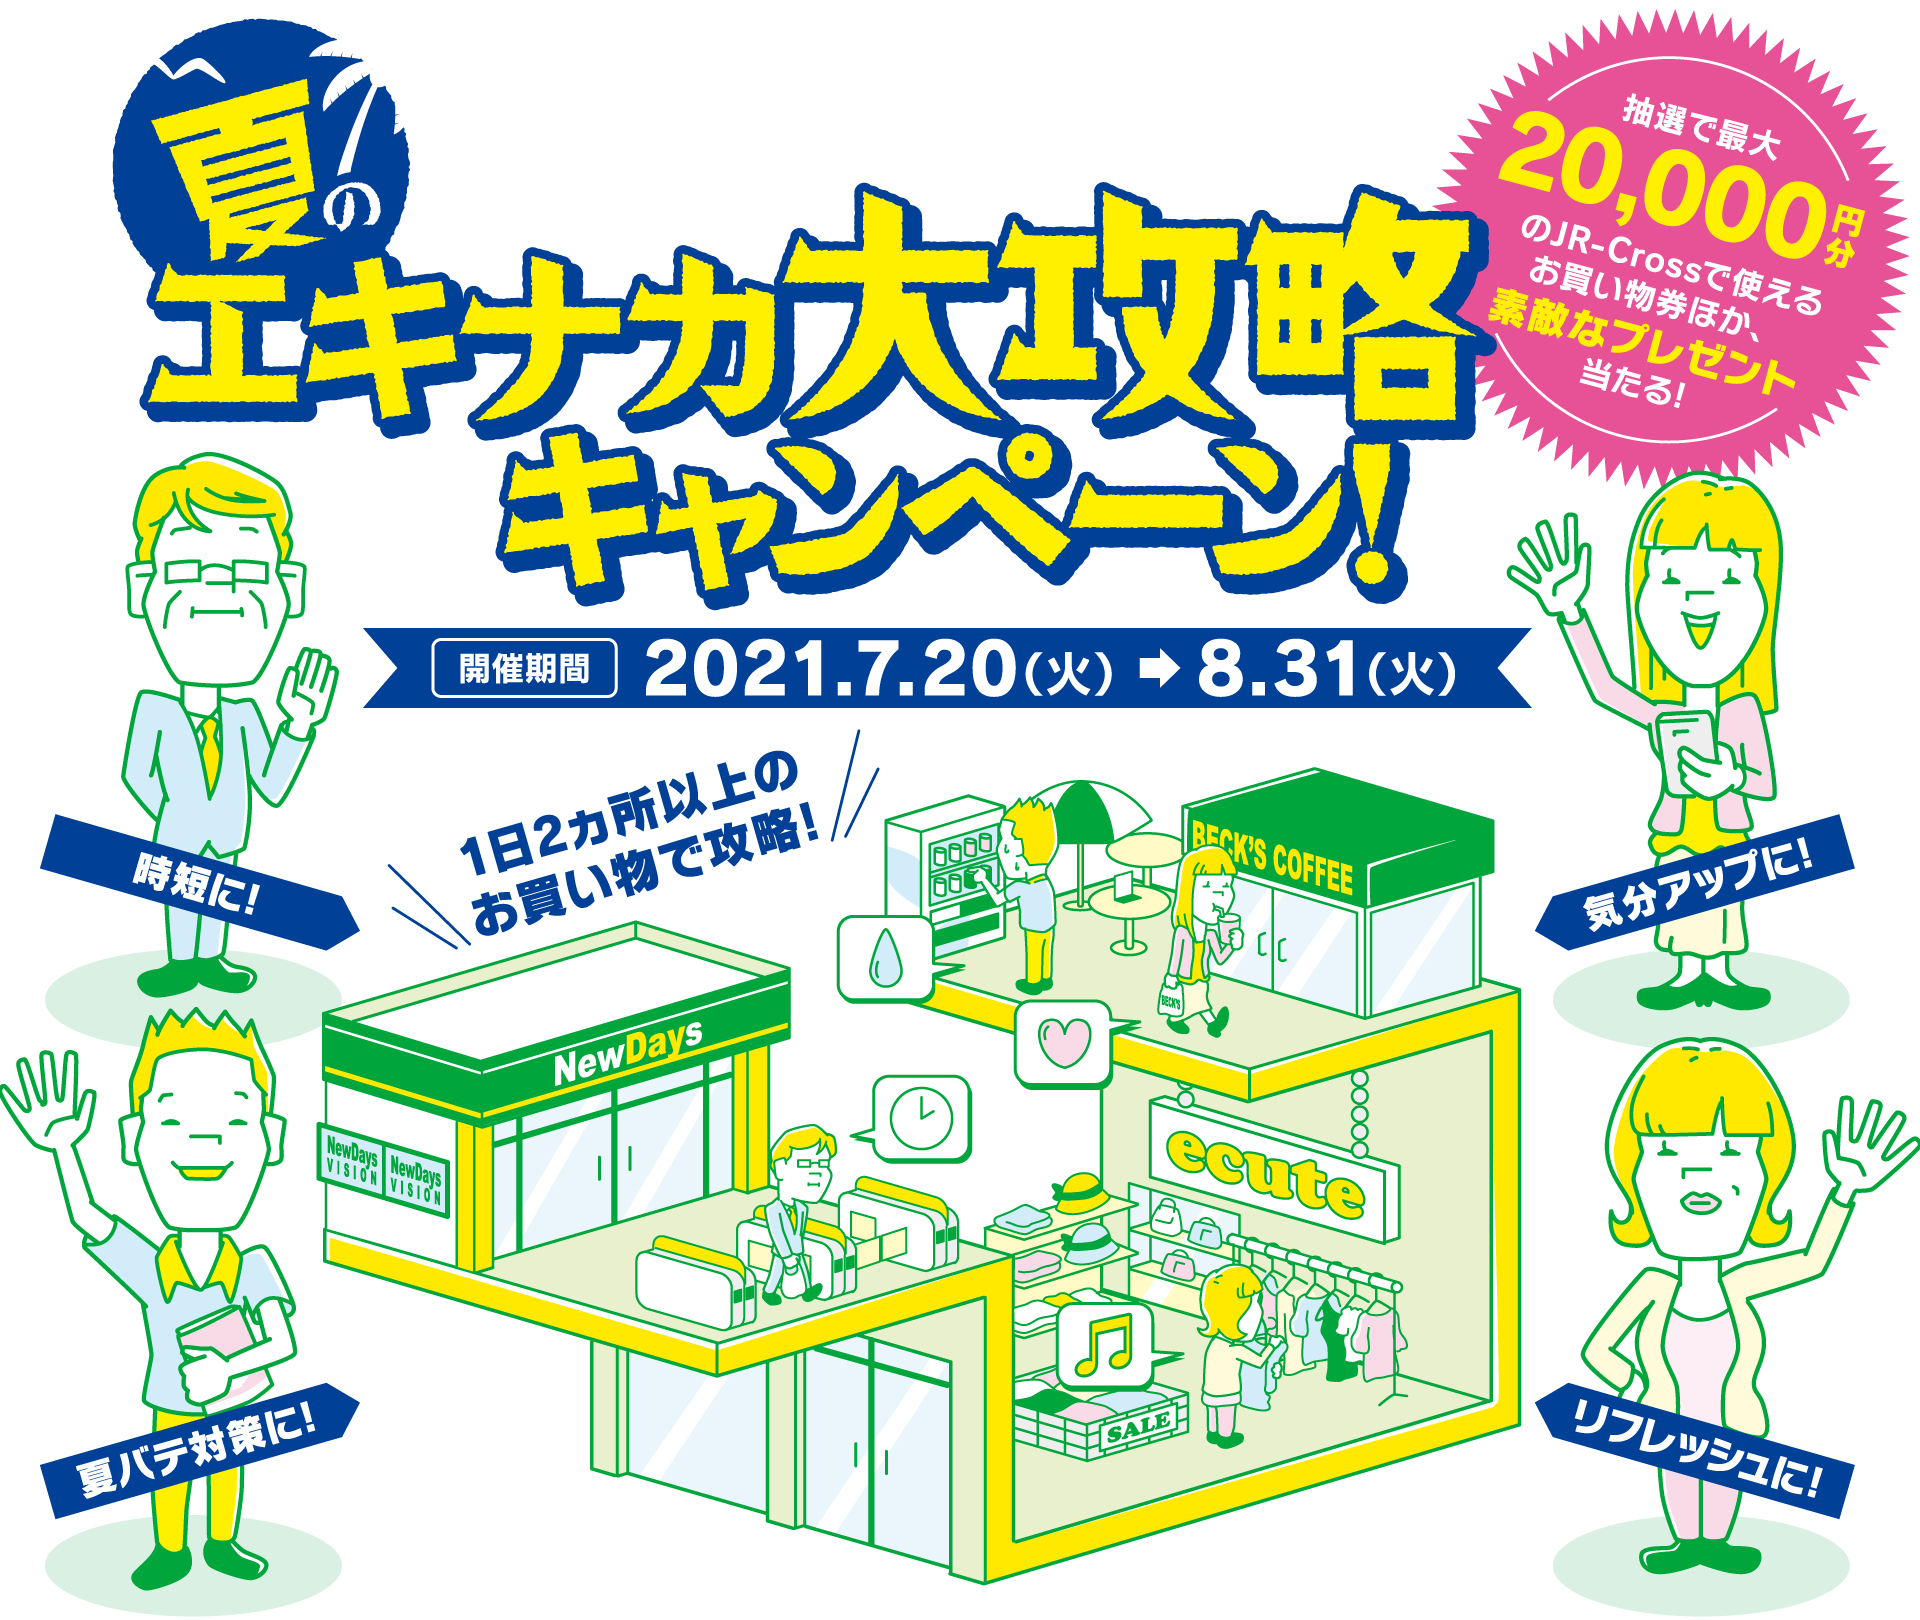 EKINAKA를 잘 다루자! EKINAKA 대공략 캠페인 추첨으로 최대 20,000엔분의 JR-Cross에서 사용할 수 있는 쇼핑 외, 멋진 선물 당첨! 개최 기간 2021.7.20(화)→8.31(화)